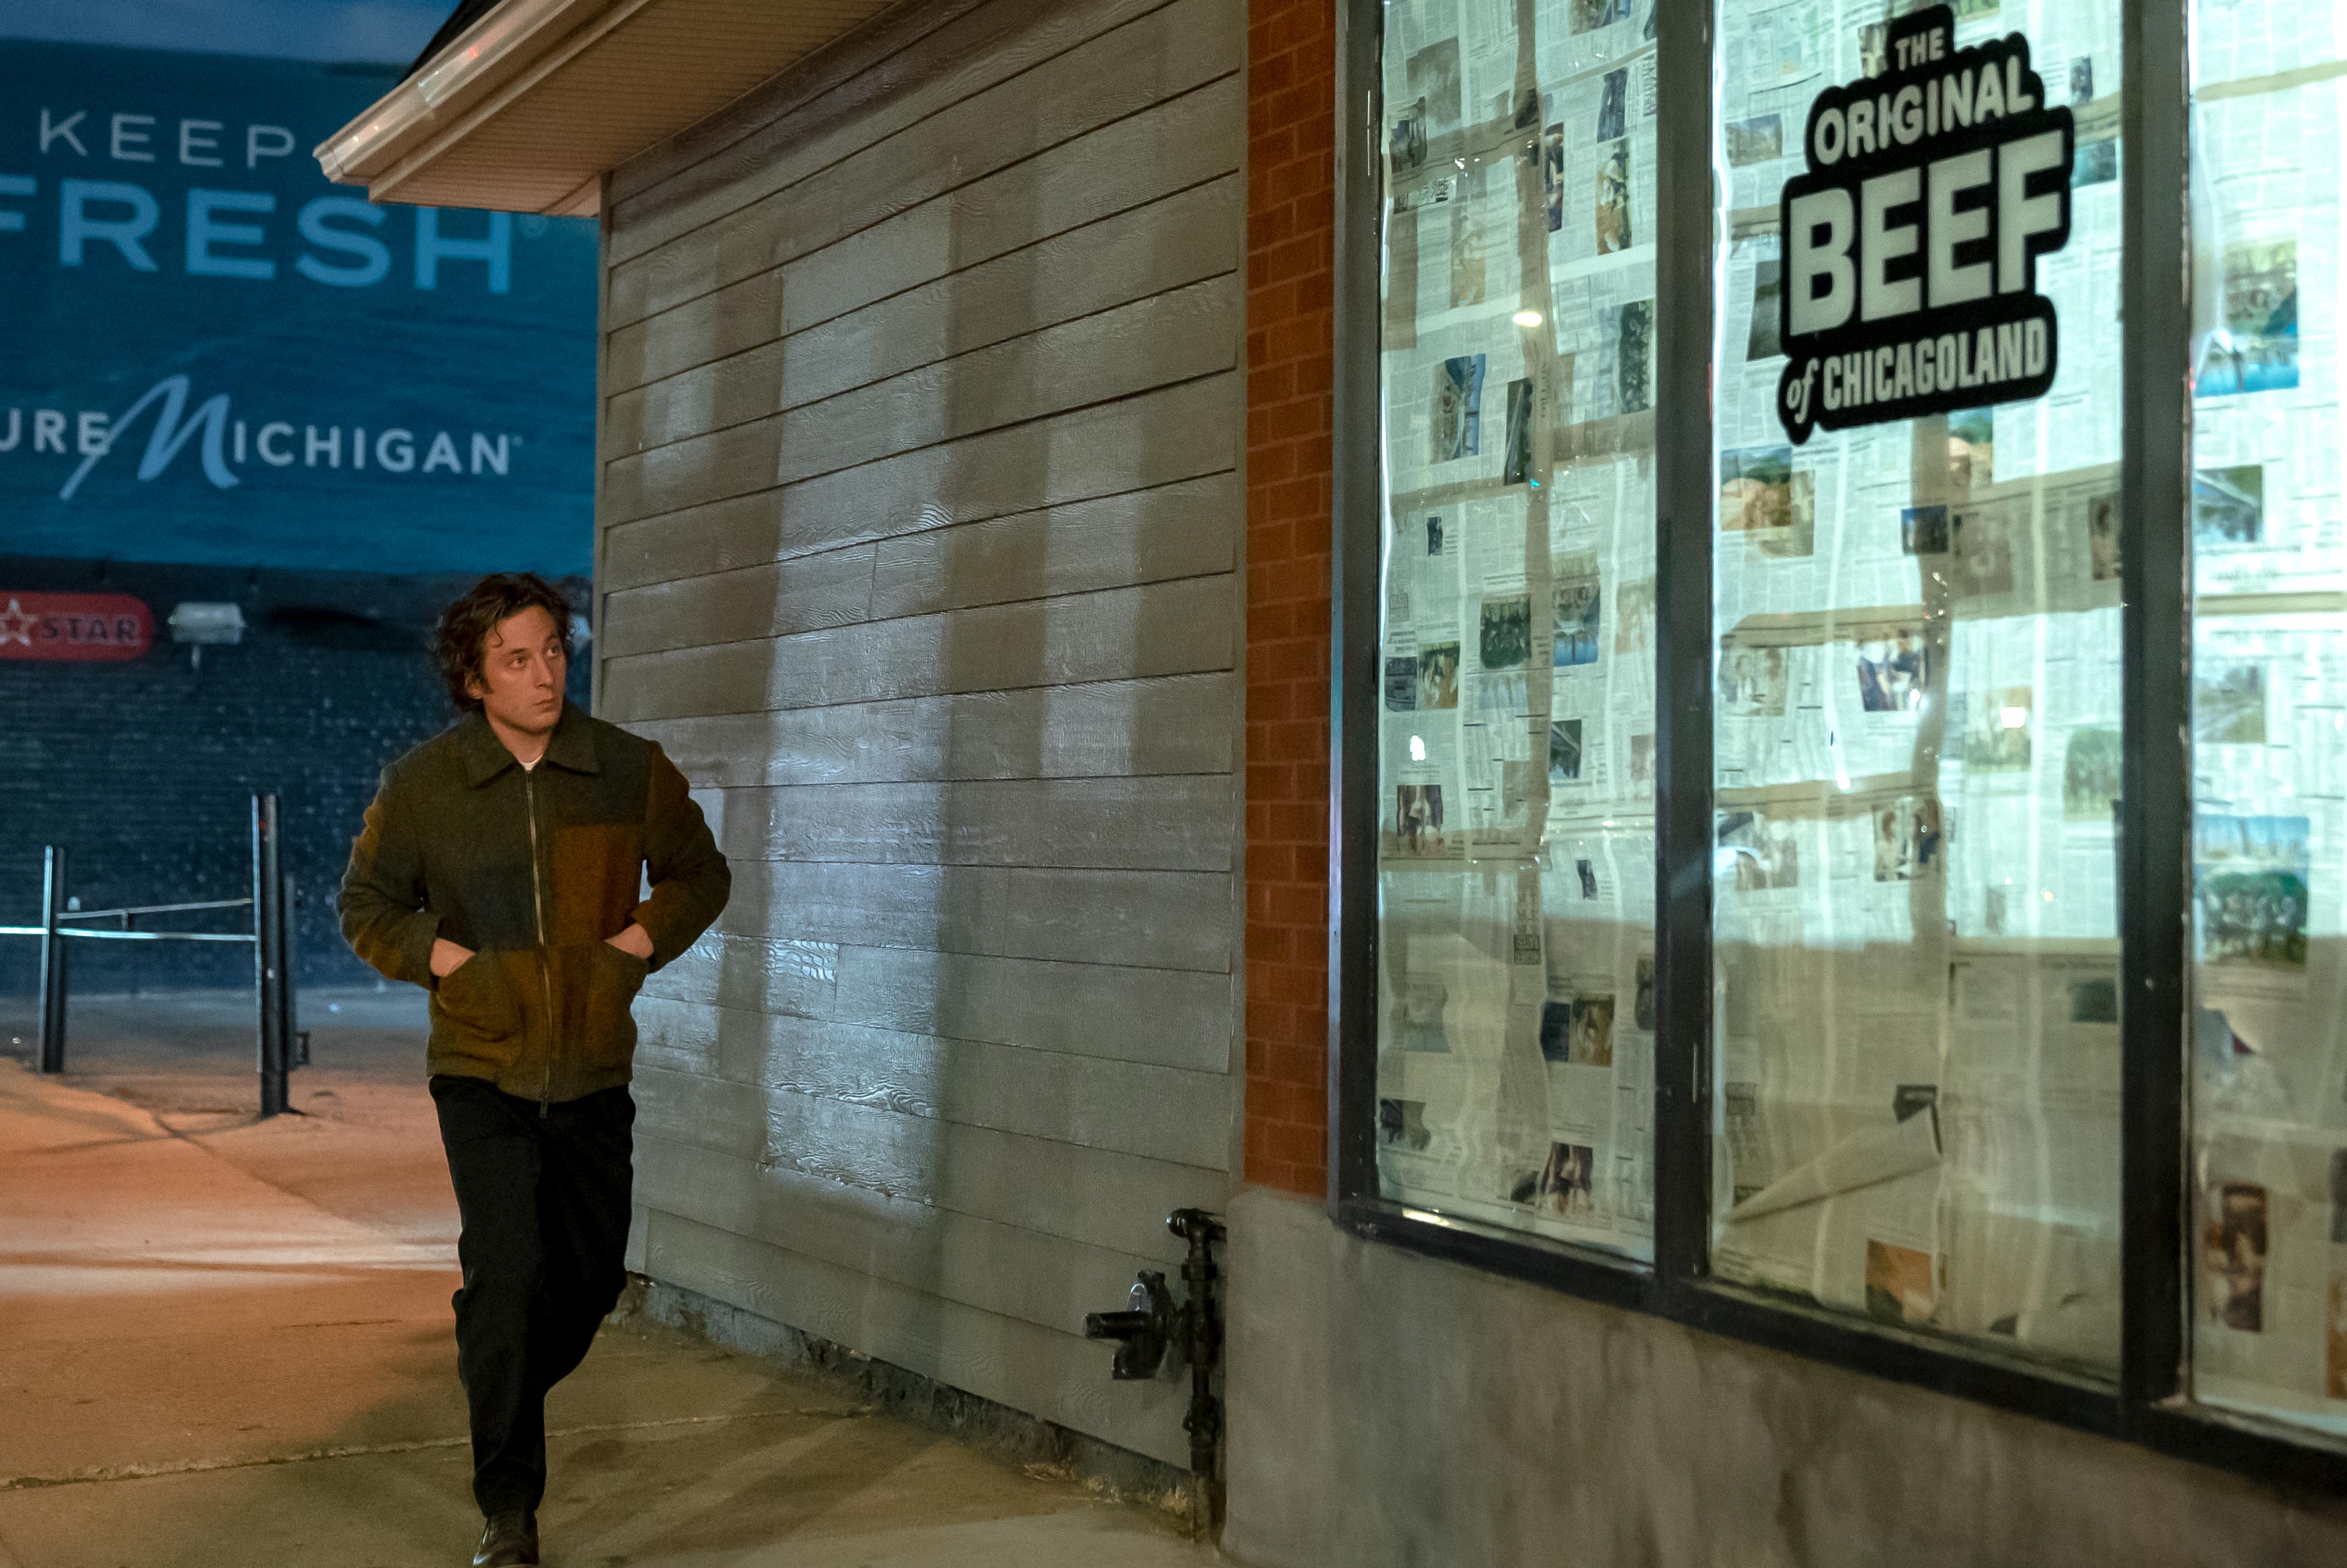 The Bear' Season 2 Ratings, Viewership for FX on Hulu